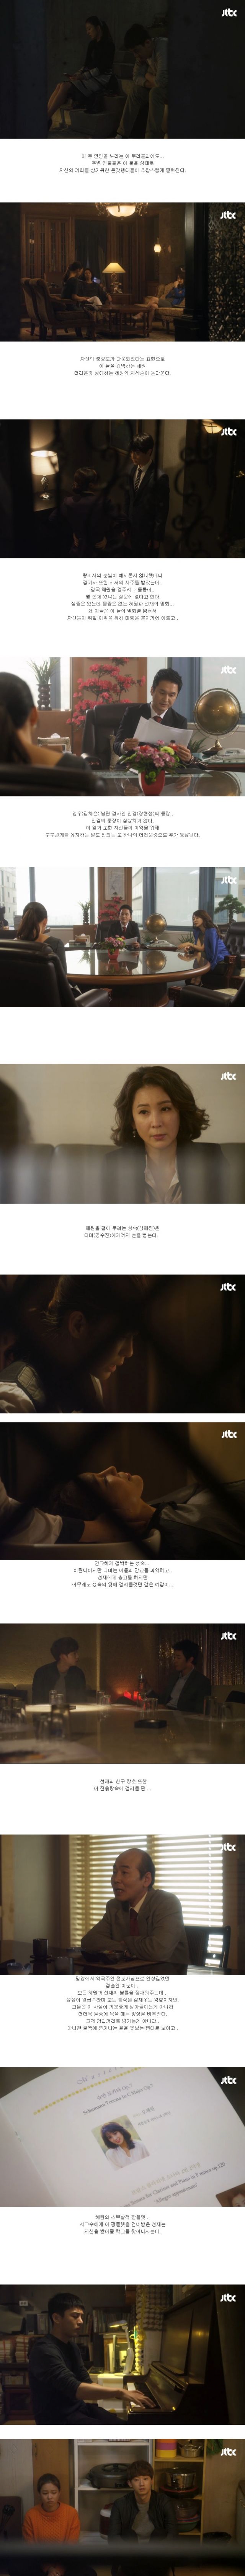 episode 12 captures for the Korean drama 'Secret Love Affair'